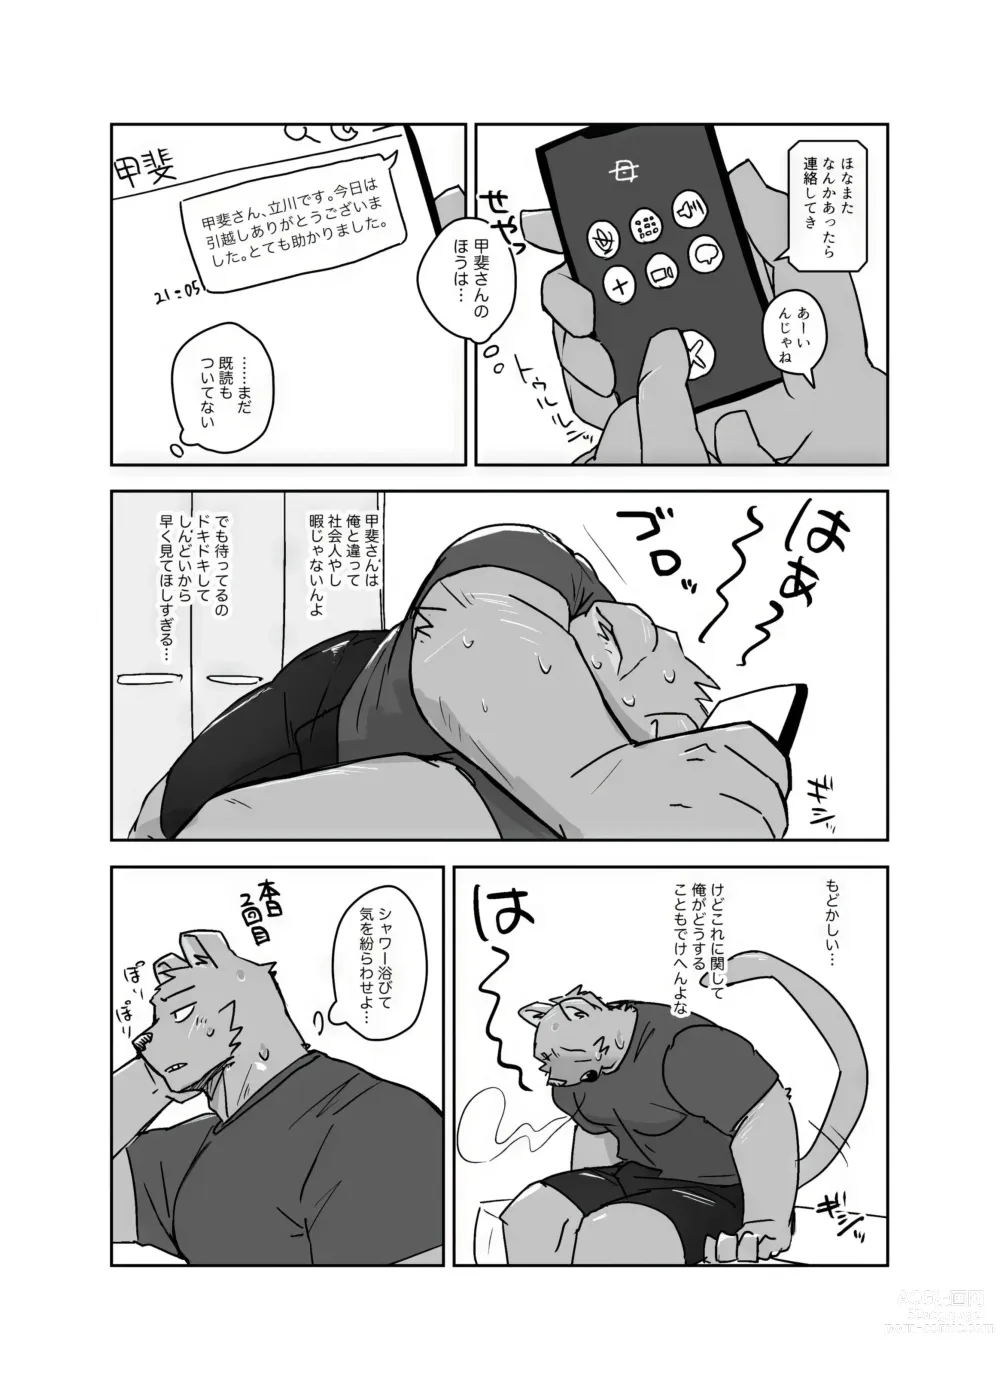 Page 7 of manga 【おまけ漫画】その日の夜